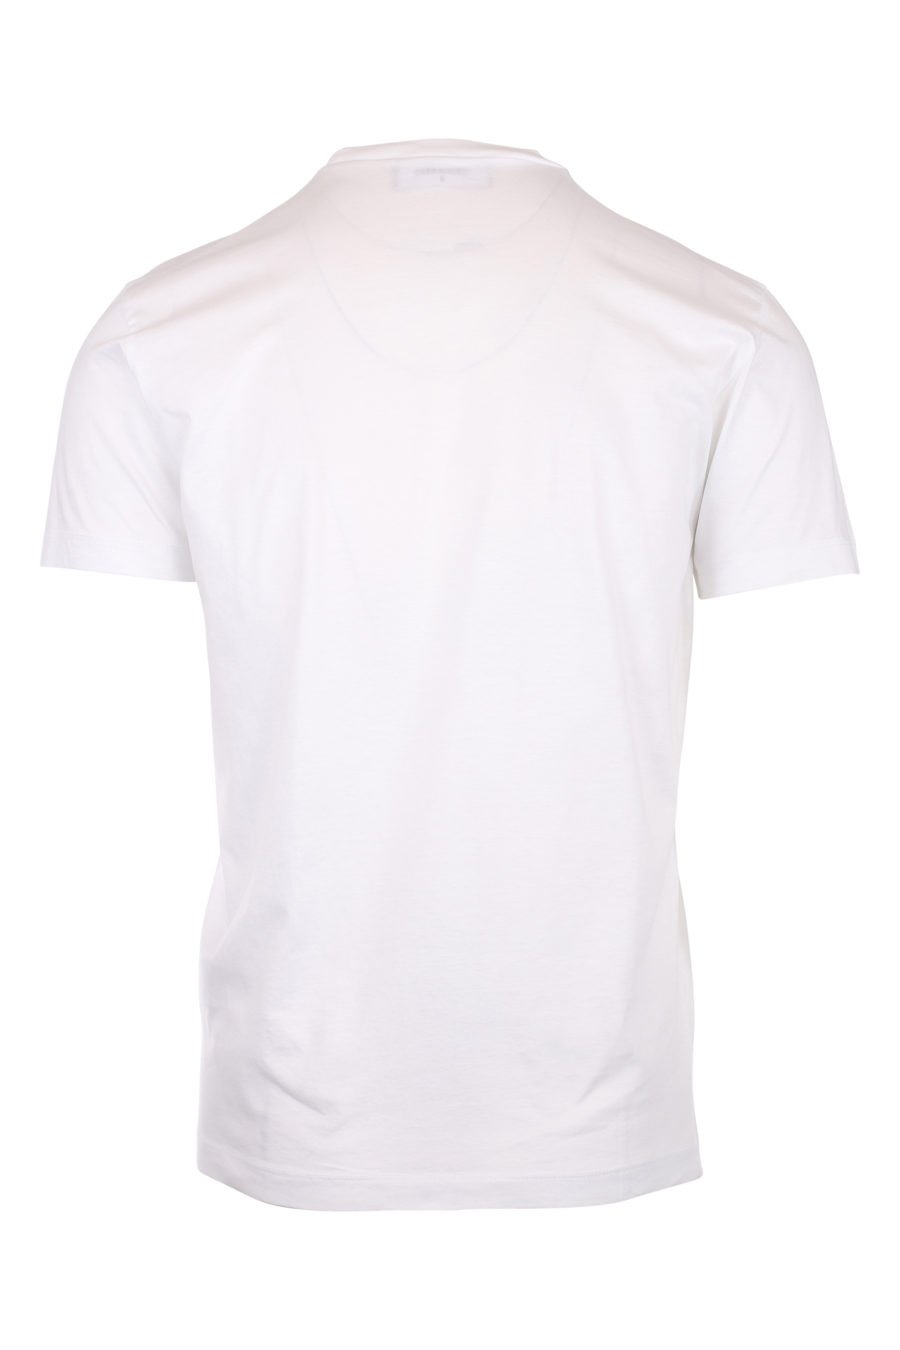 White T-shirt with "icon" logo - IMG 9768